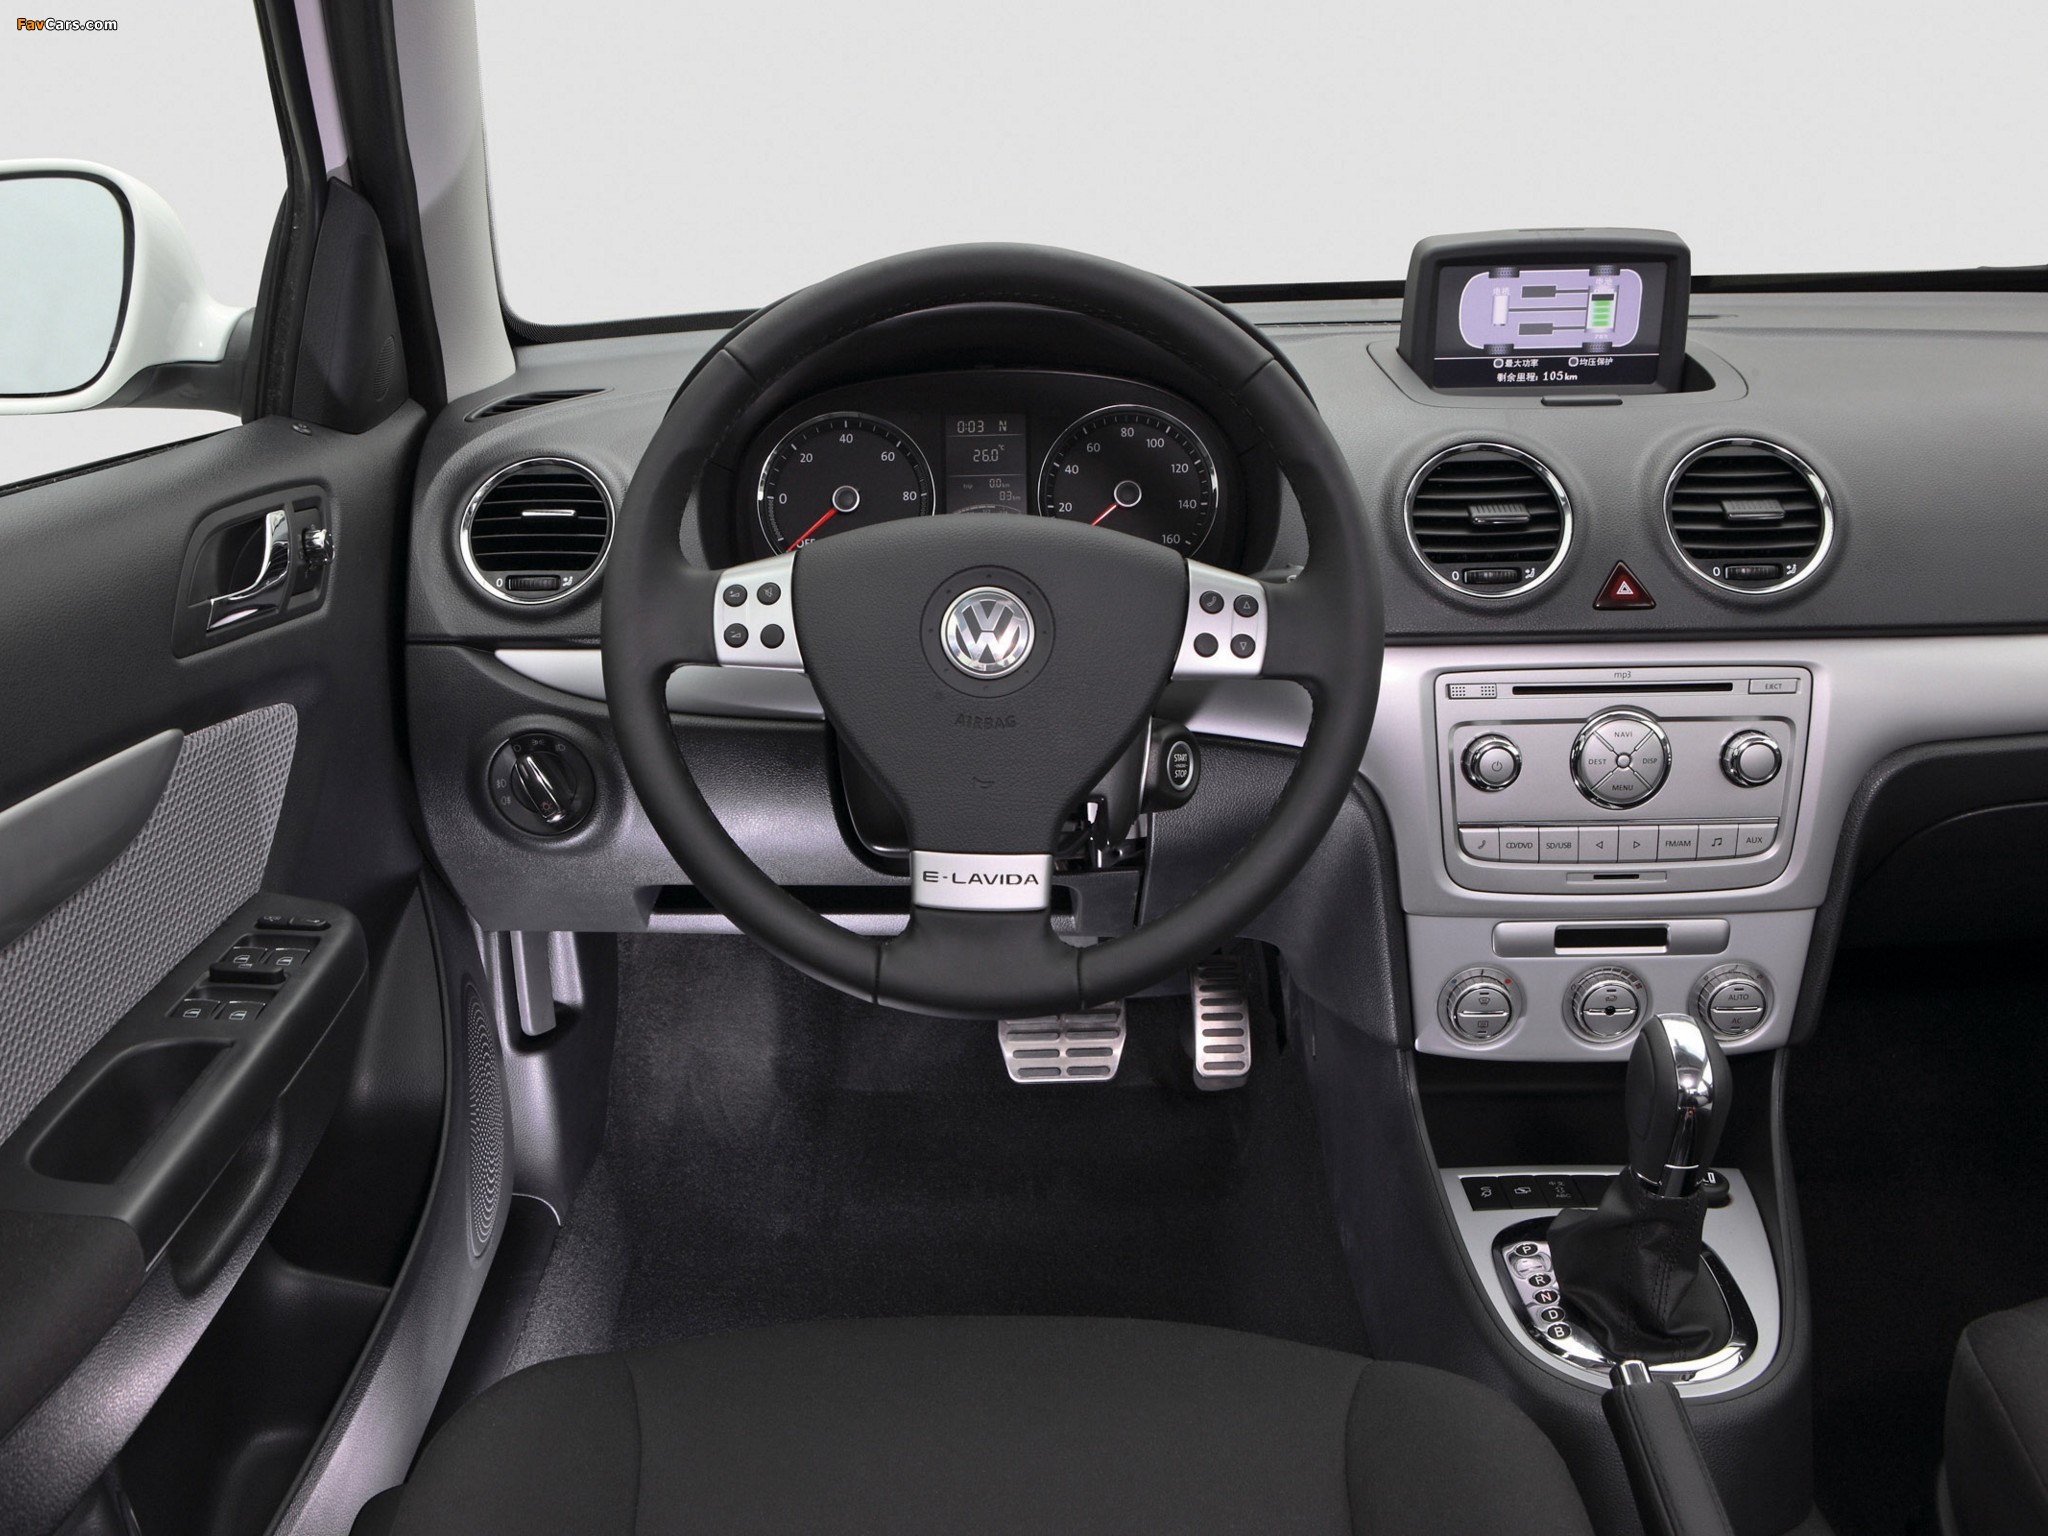 Volkswagen E-Lavida Concept 2010 images (2048 x 1536)